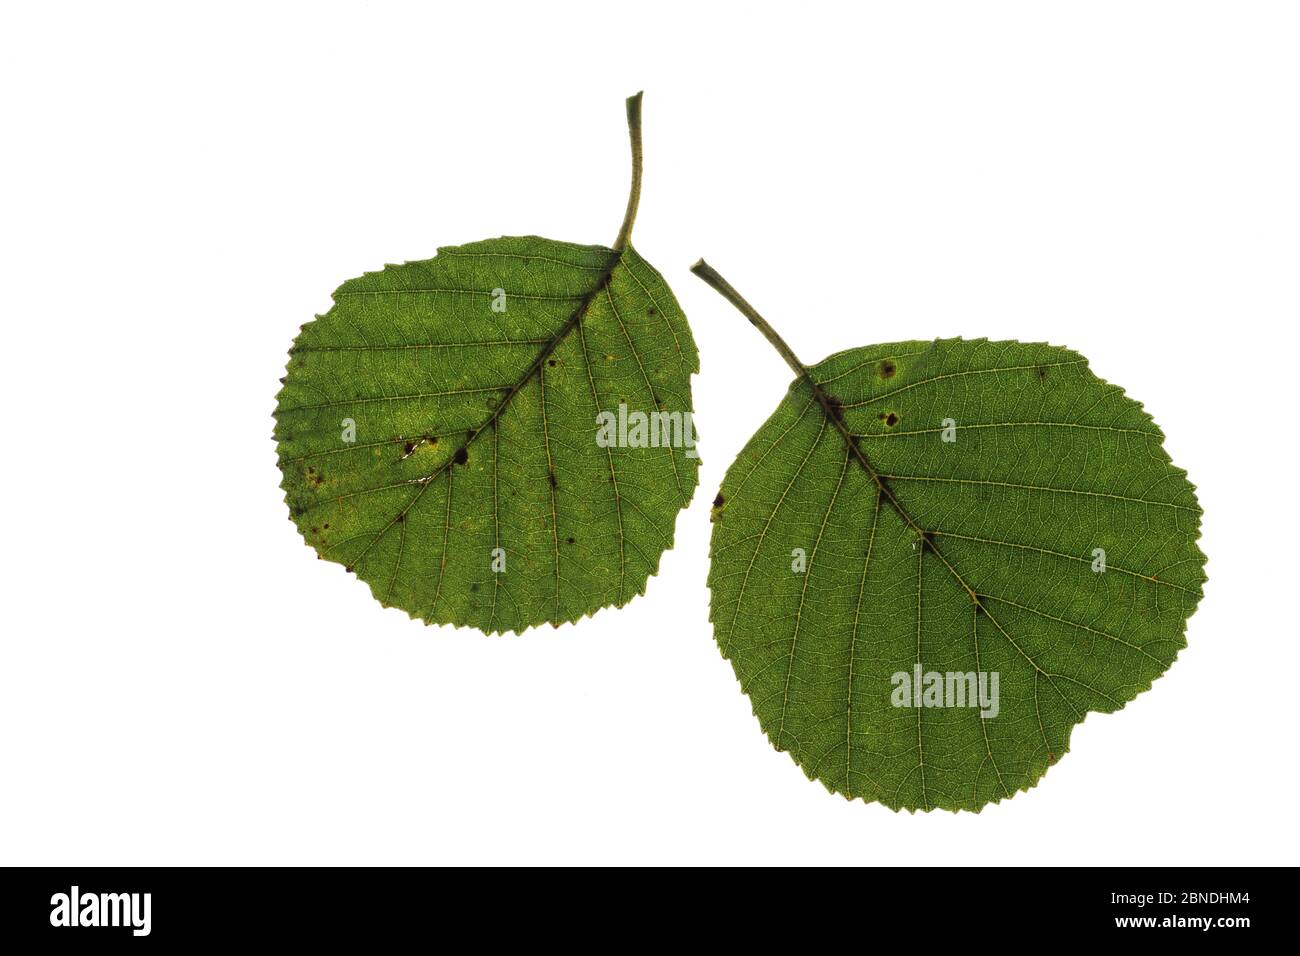 Common alder (Alnus glutinosa) leaves on white background. Stock Photo